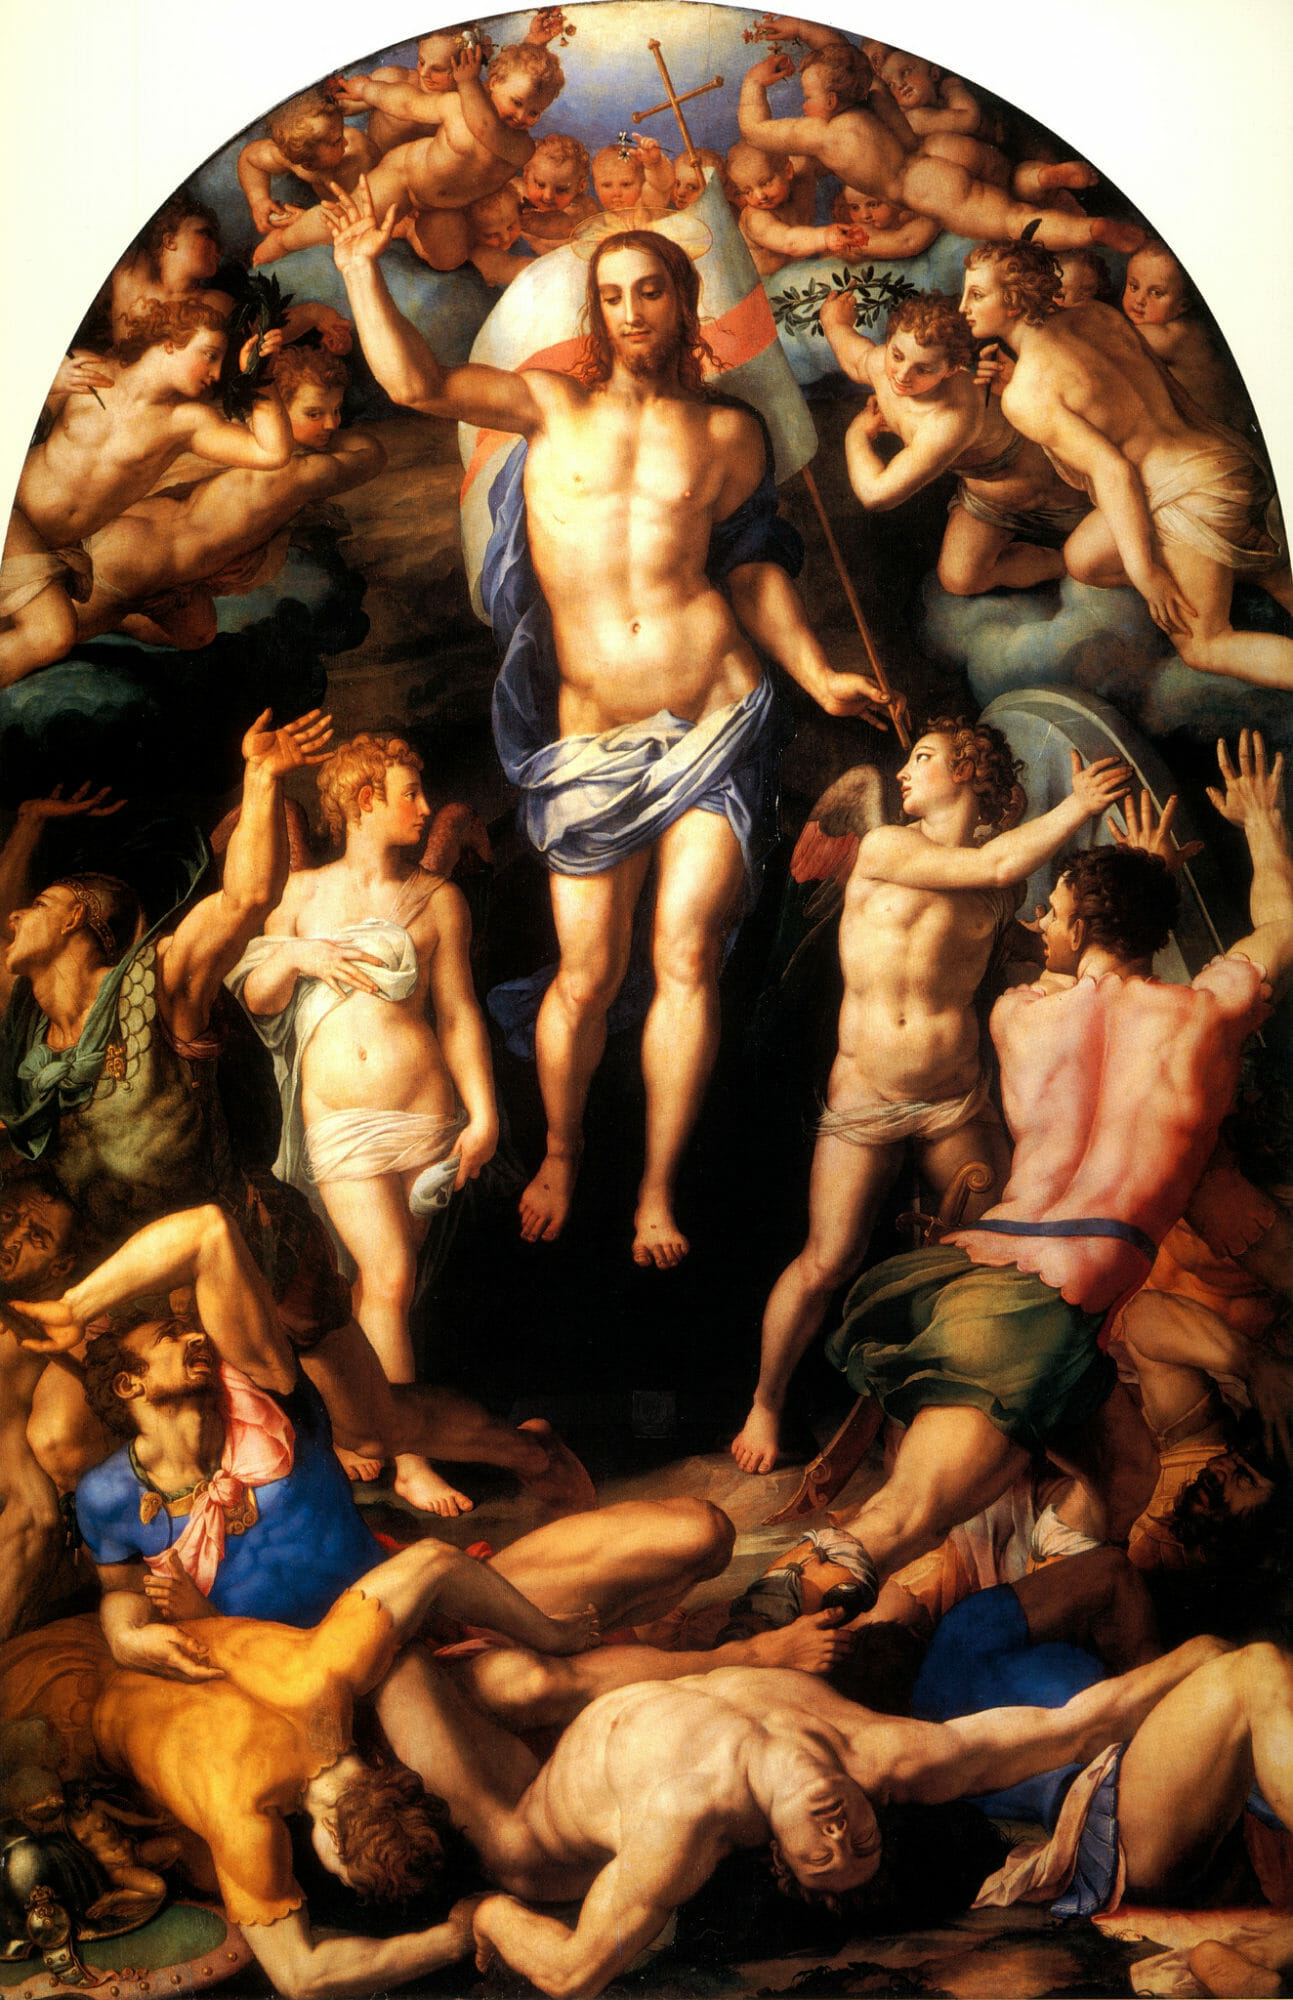  Resurrection, Agnolo Bronzino, 1549-52. Oil on panel, 445 x 280 cm. Guadagni Chapel, Santissima Annunziata, Florence, Italy. Mannerism's inappropriate sensuousness.